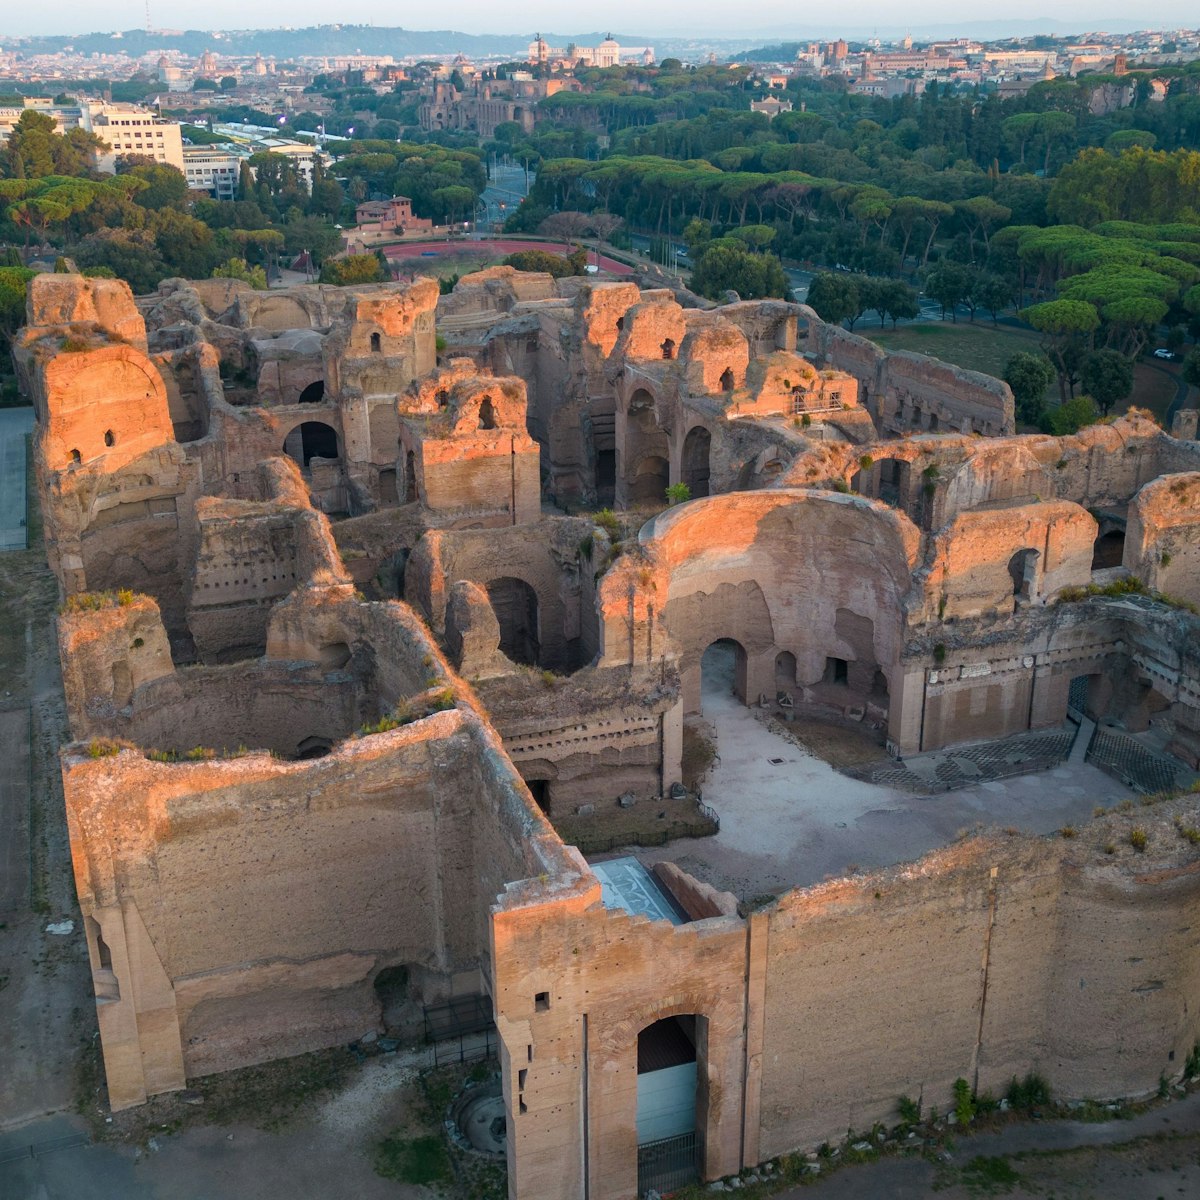 Baths of Caracalla - Ancient Roman Ruins. Rome, Italy.